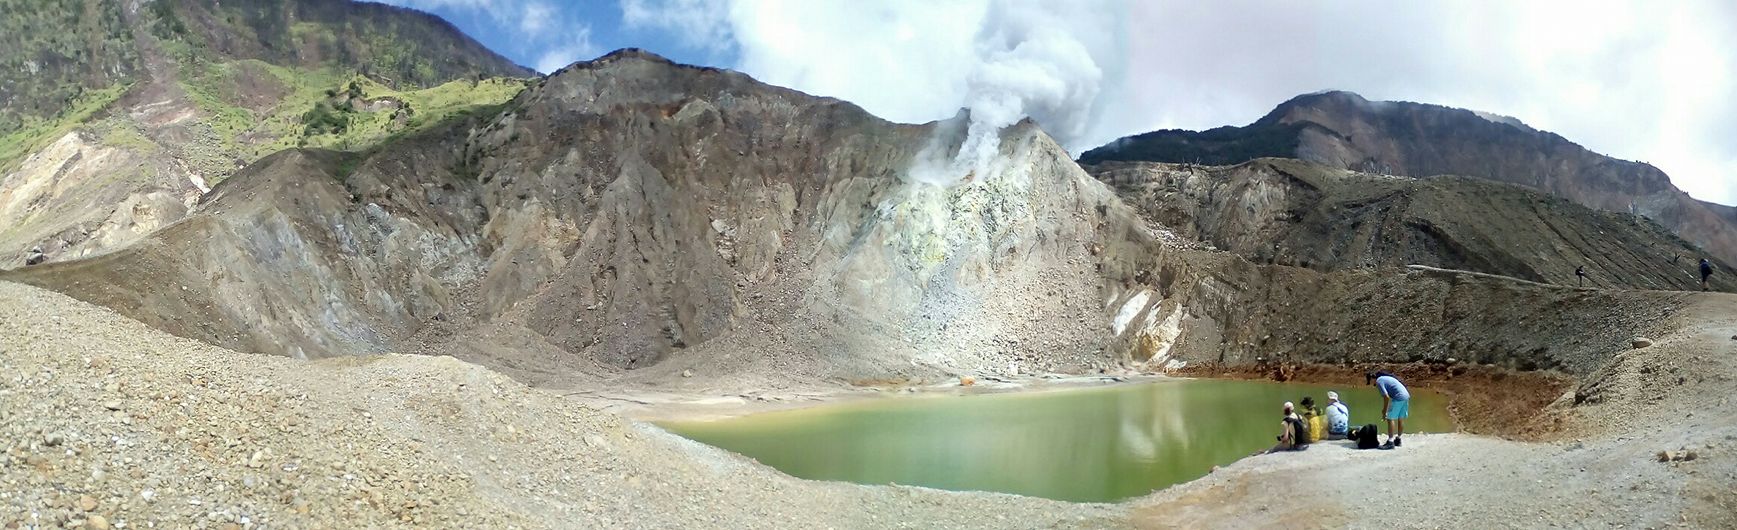 Papandayan volcano crater lake